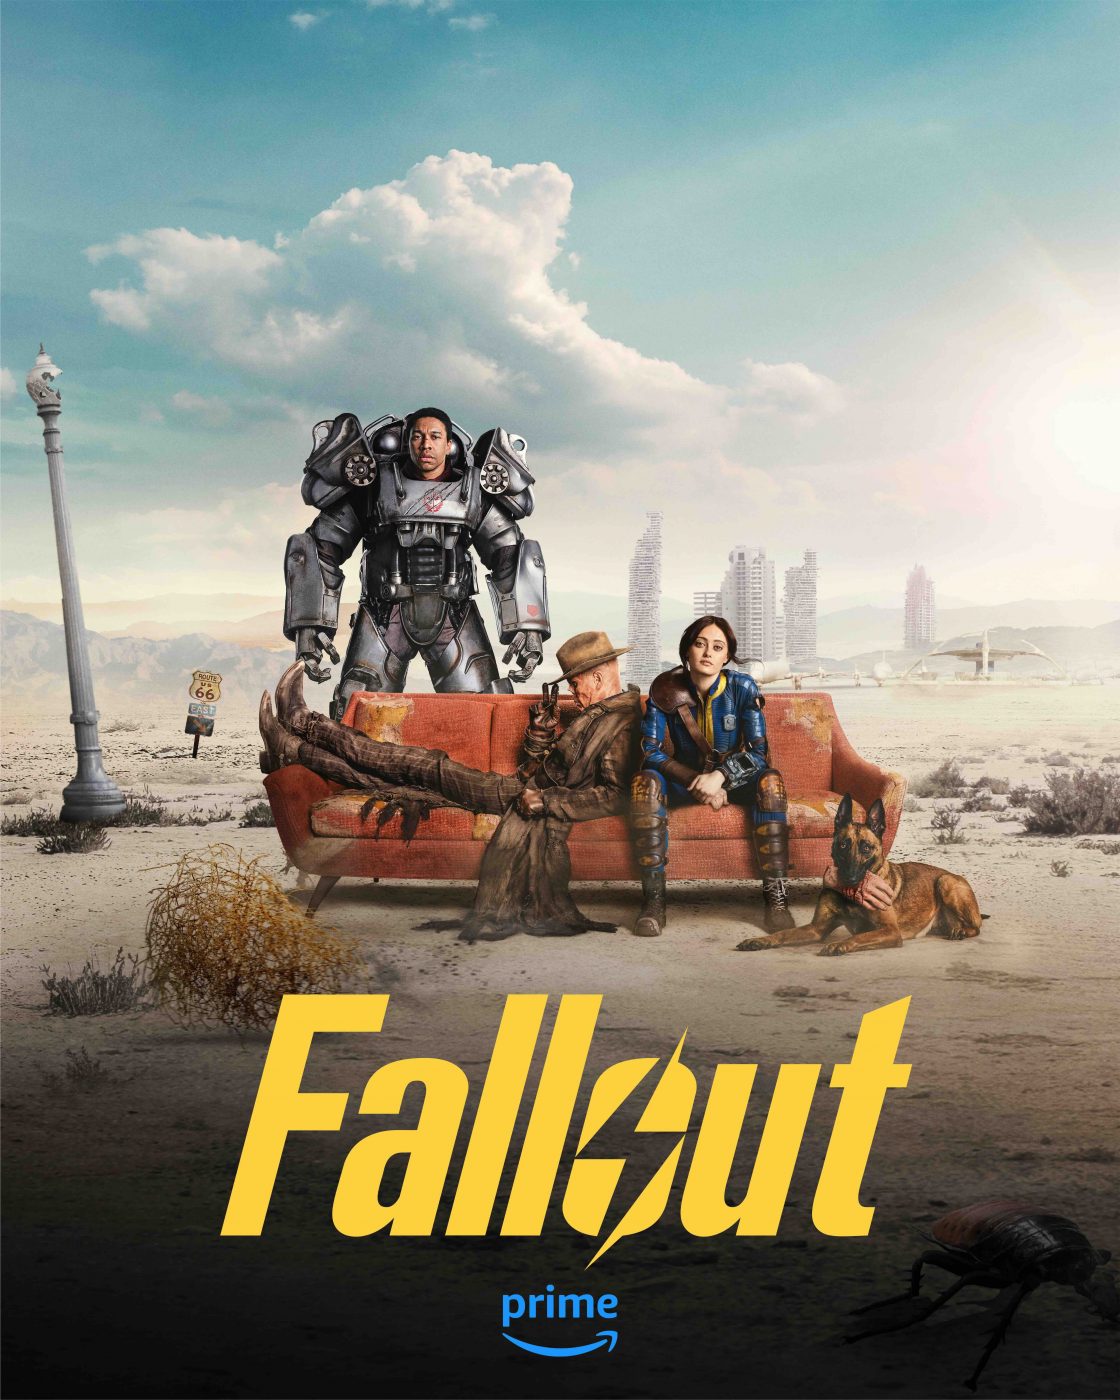 ‘Fallout’ boom